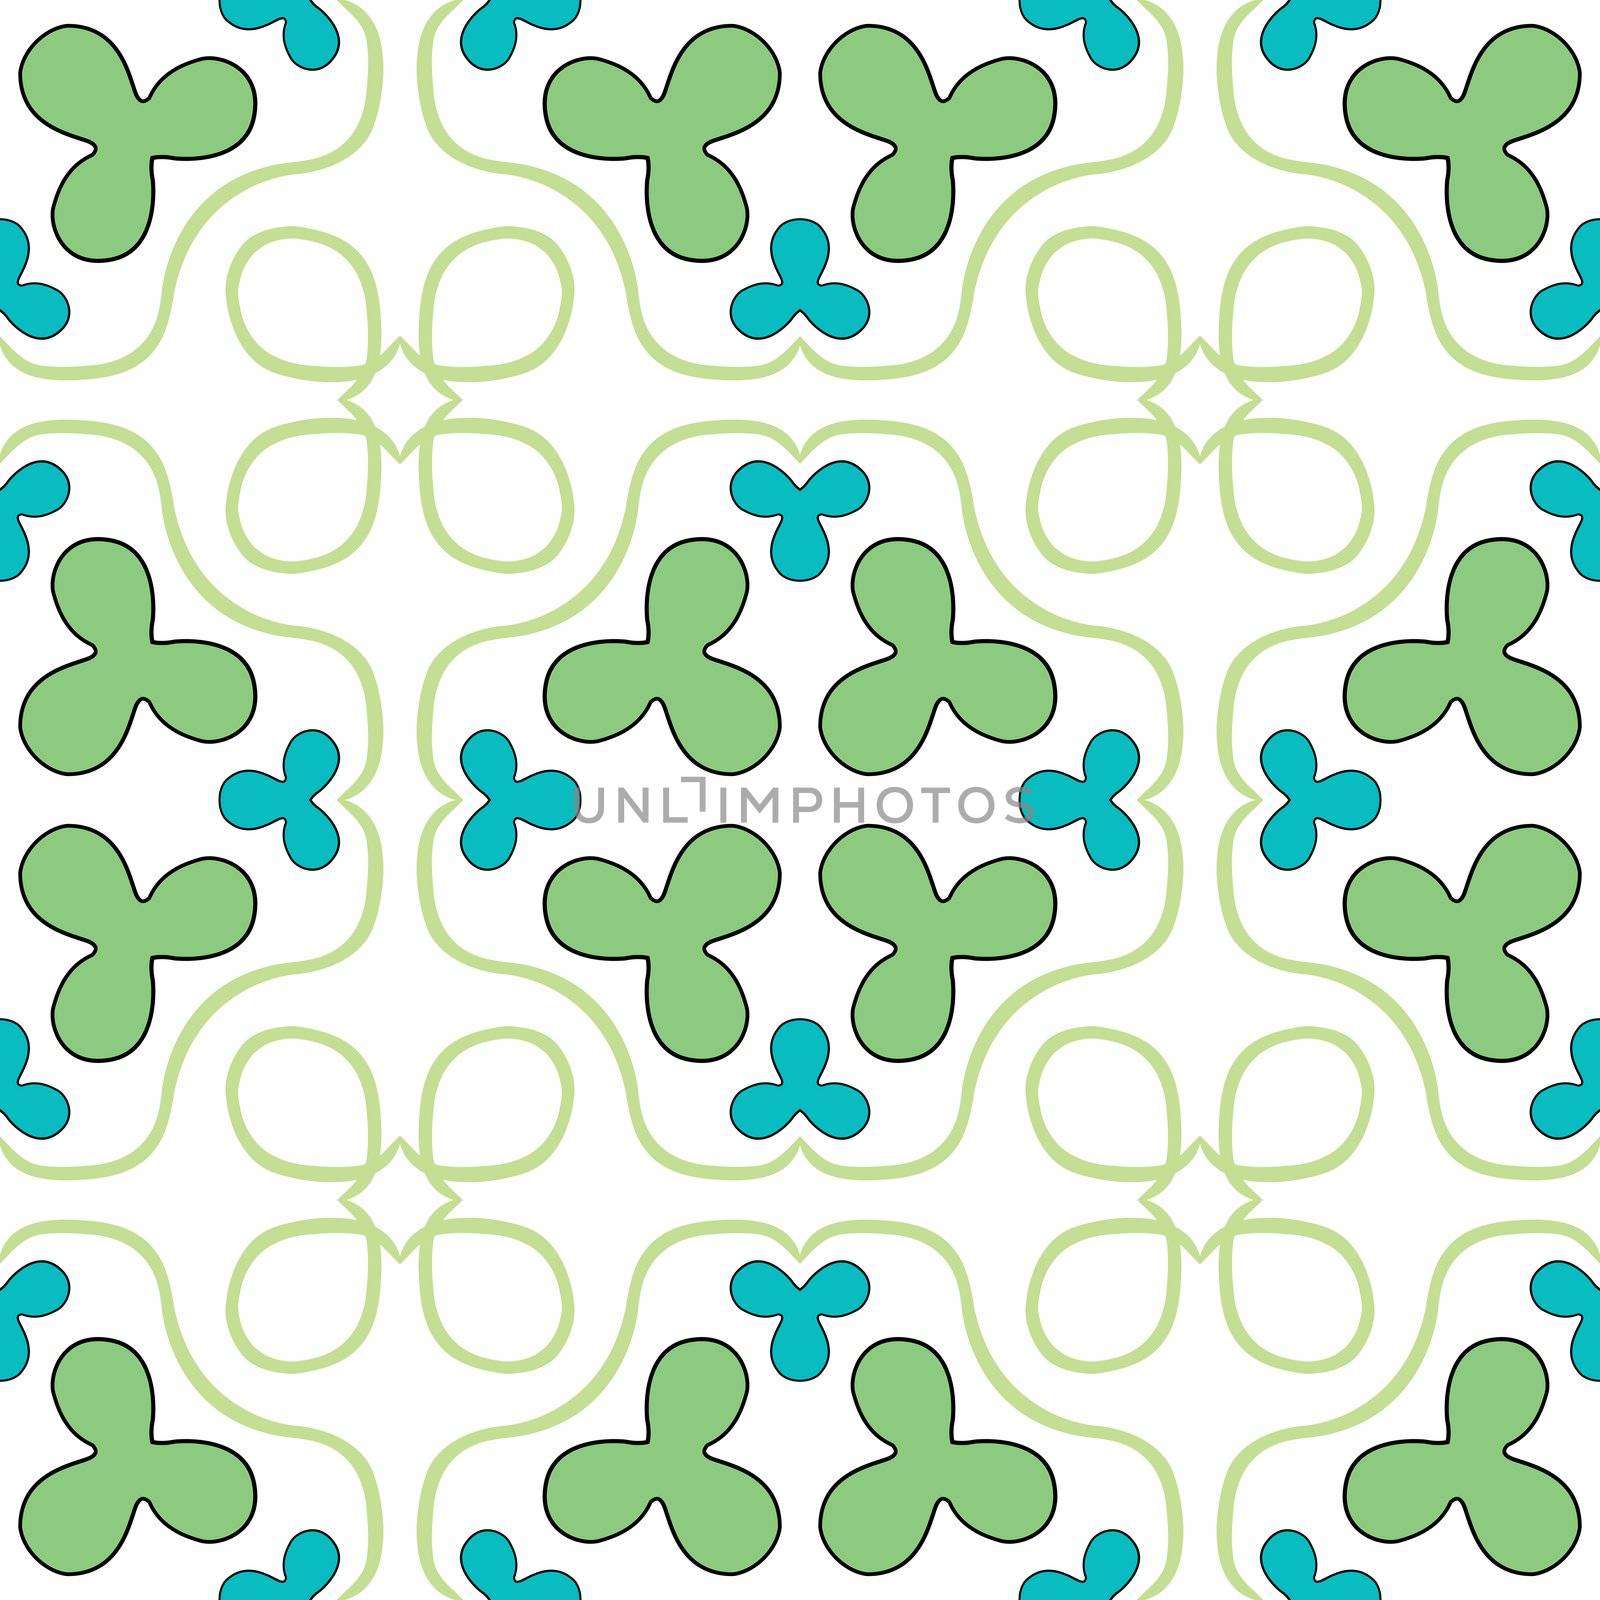 clover seamless texture, abstract pattern; vector art illustration